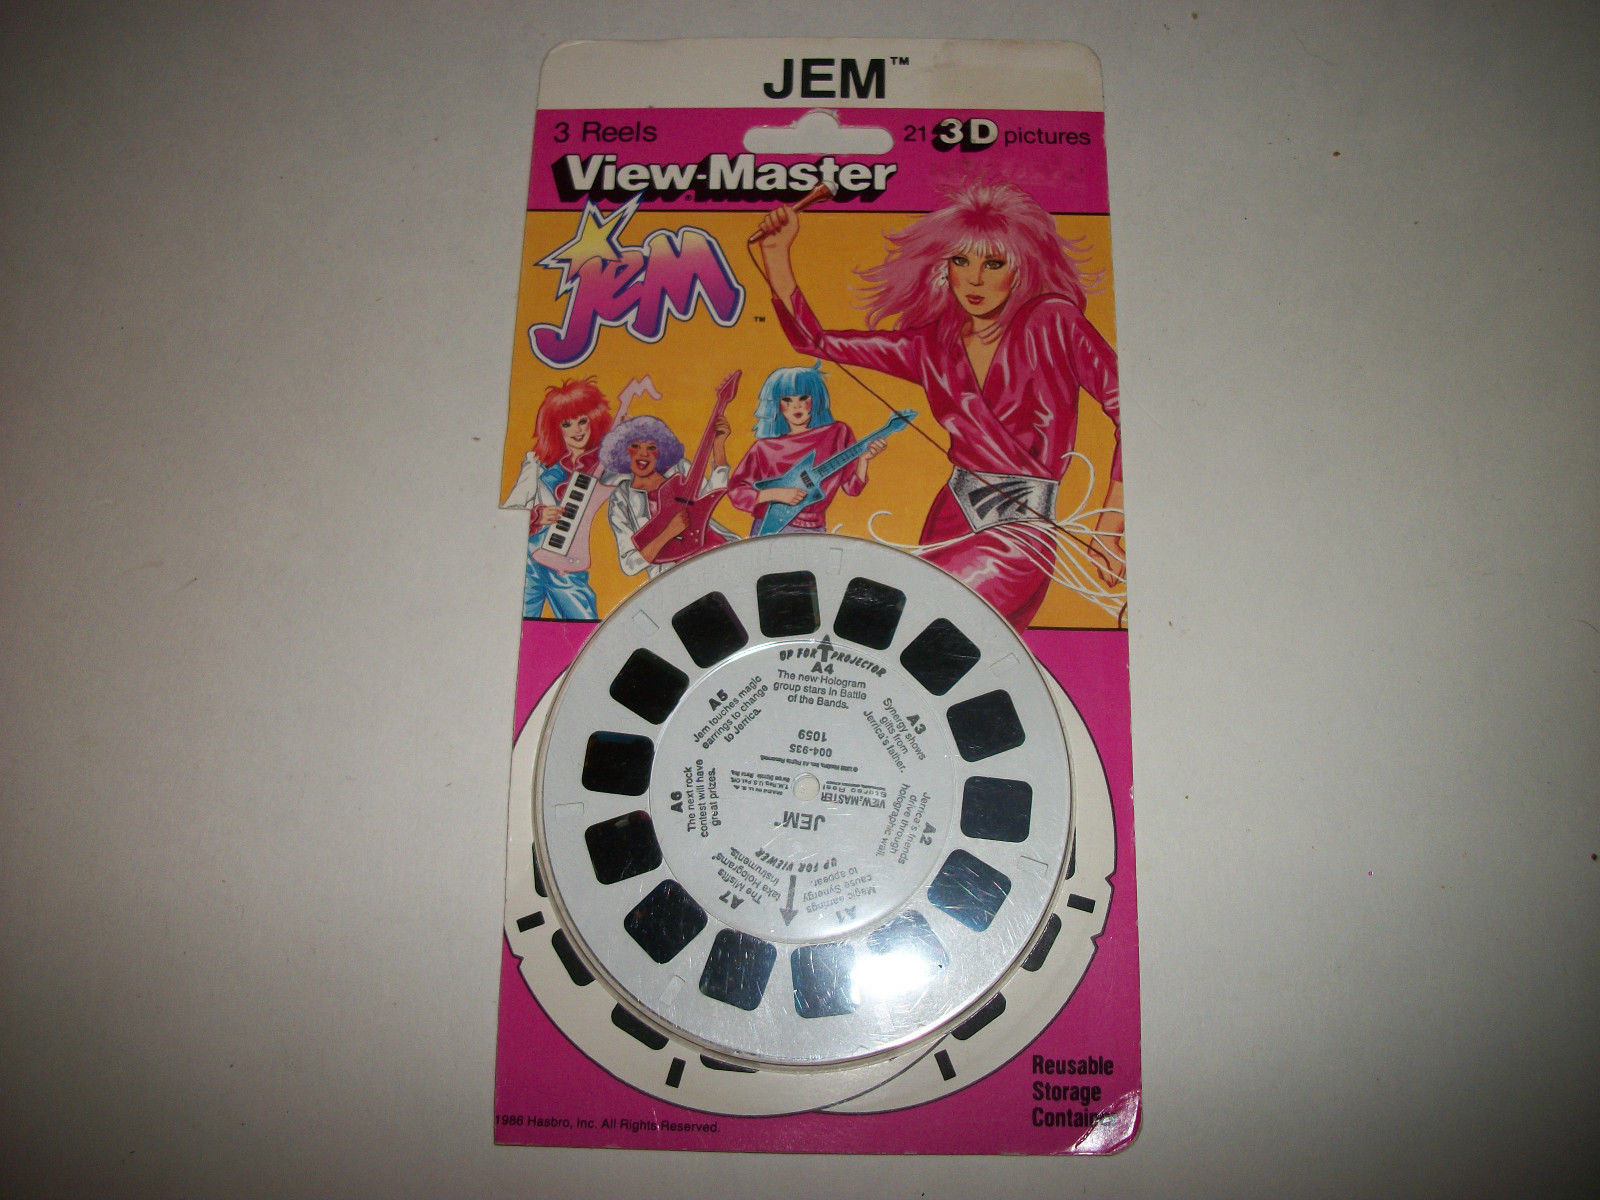 Jem View-Master reels still in the original packaging 